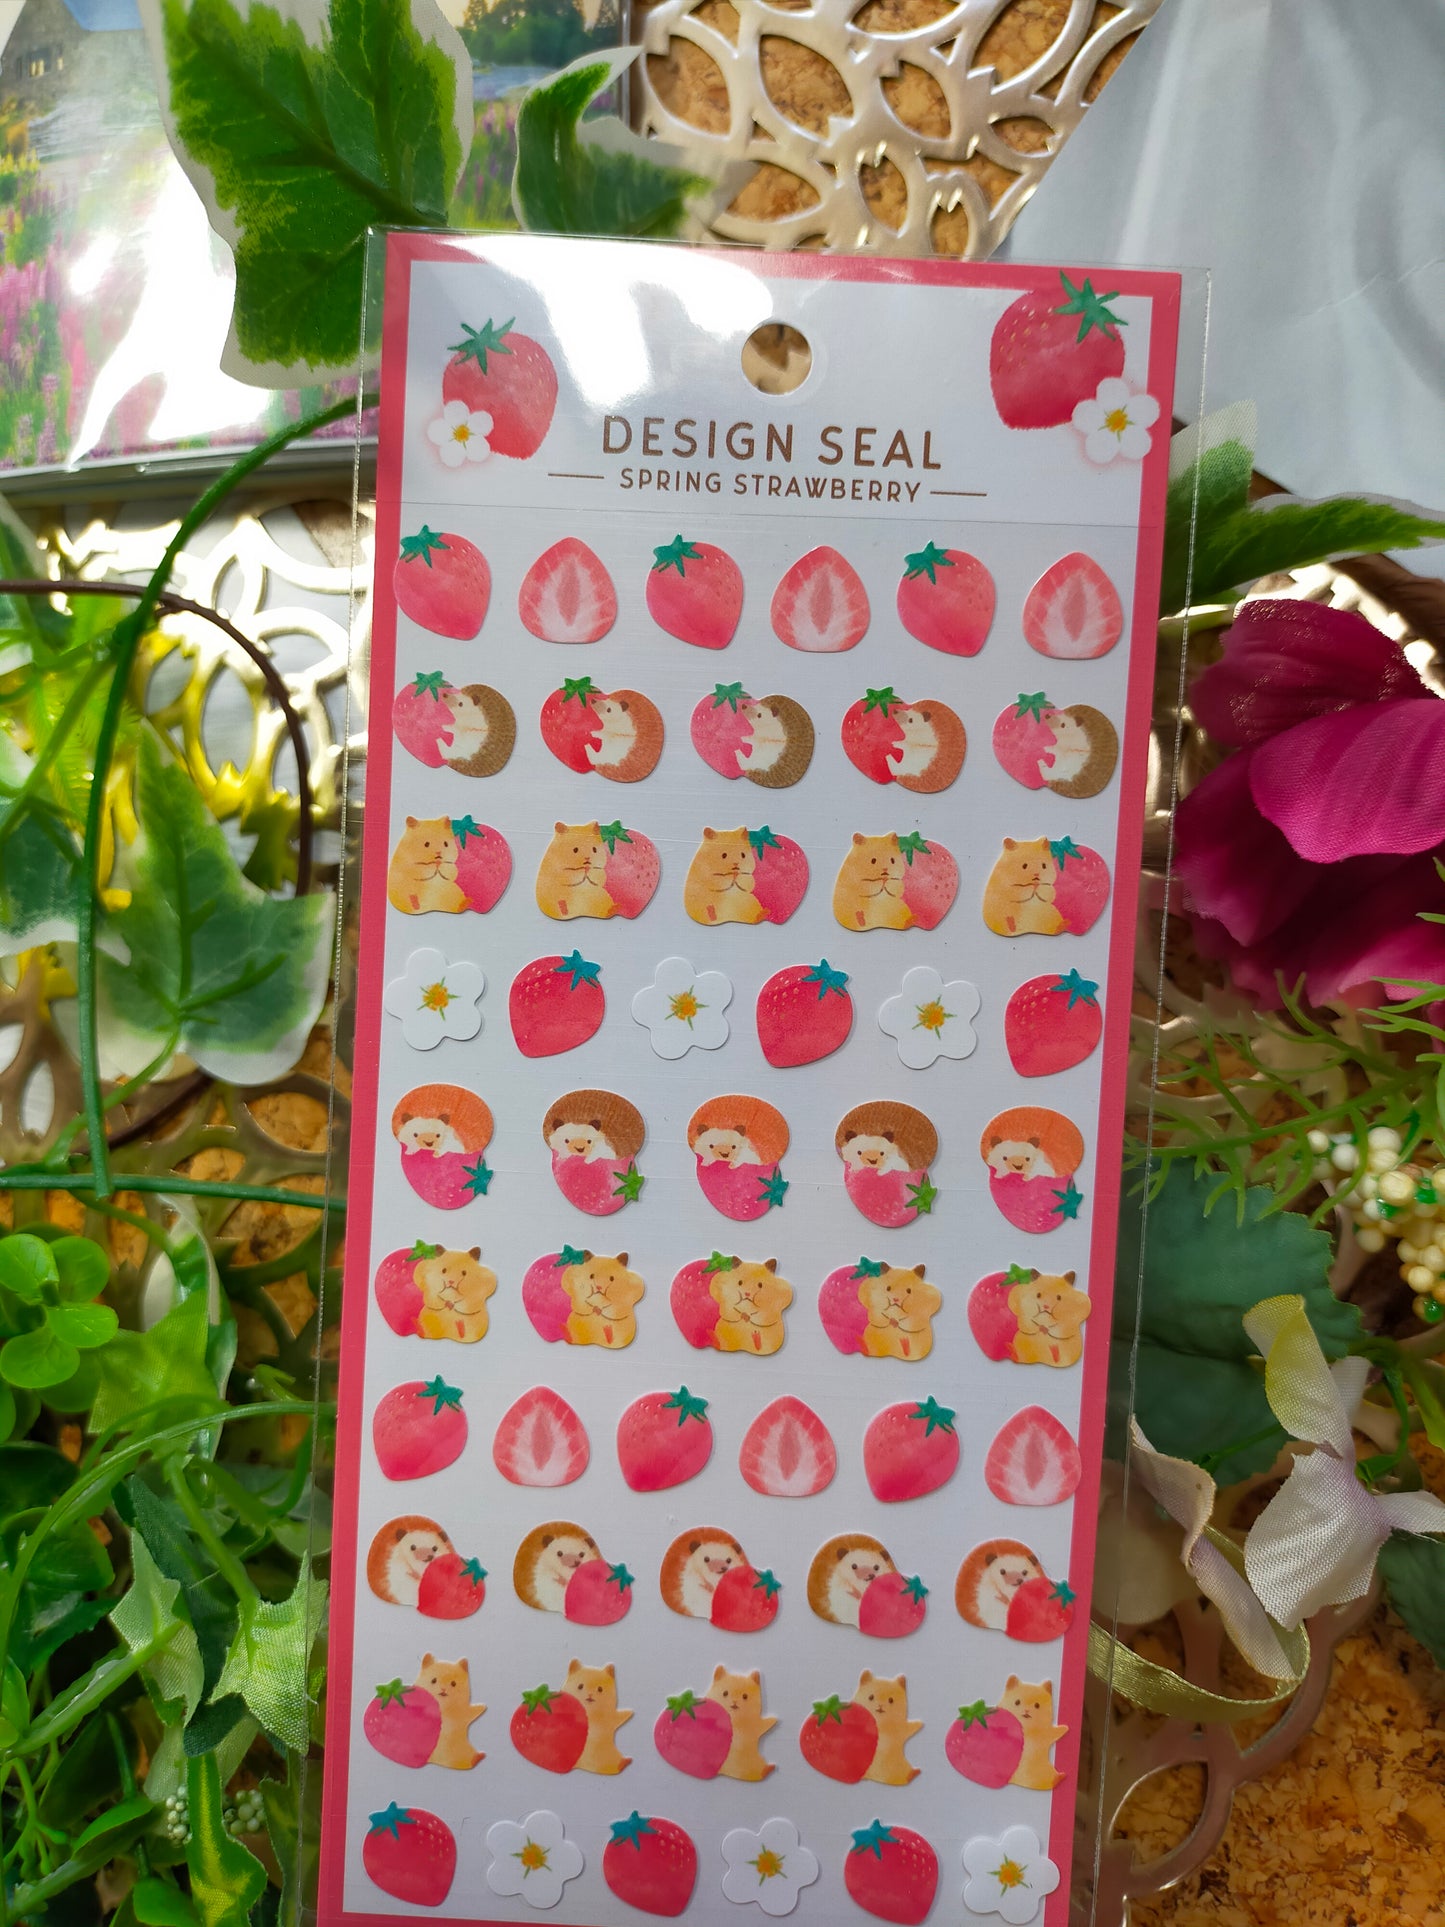 Design Seal Spring, Synapse Japan_ Strawberry Spring / Cherry Blossom